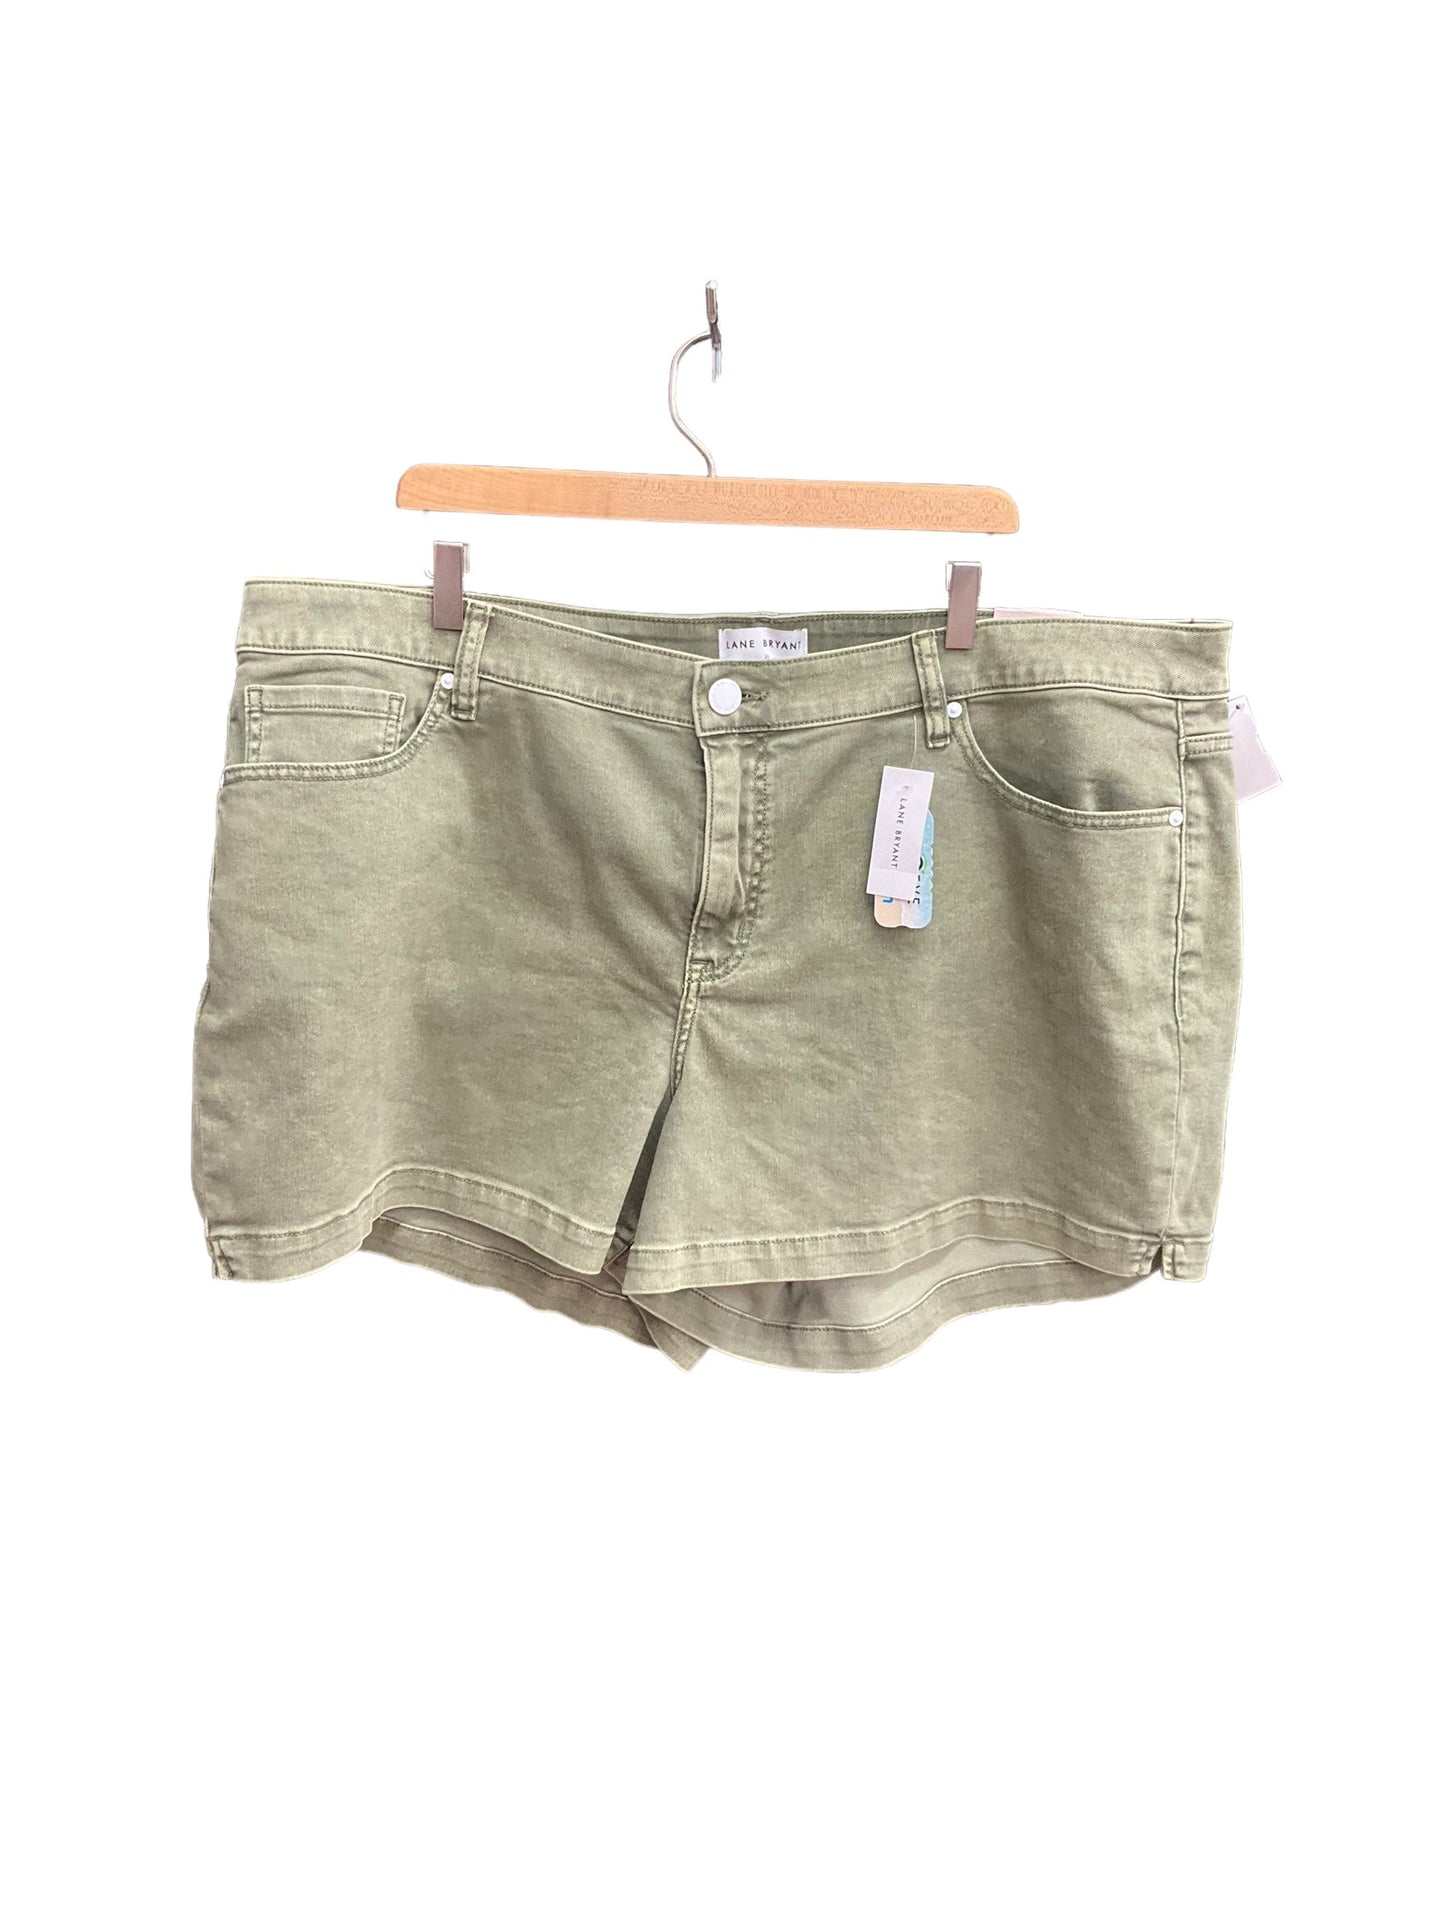 Green Shorts Lane Bryant, Size 26